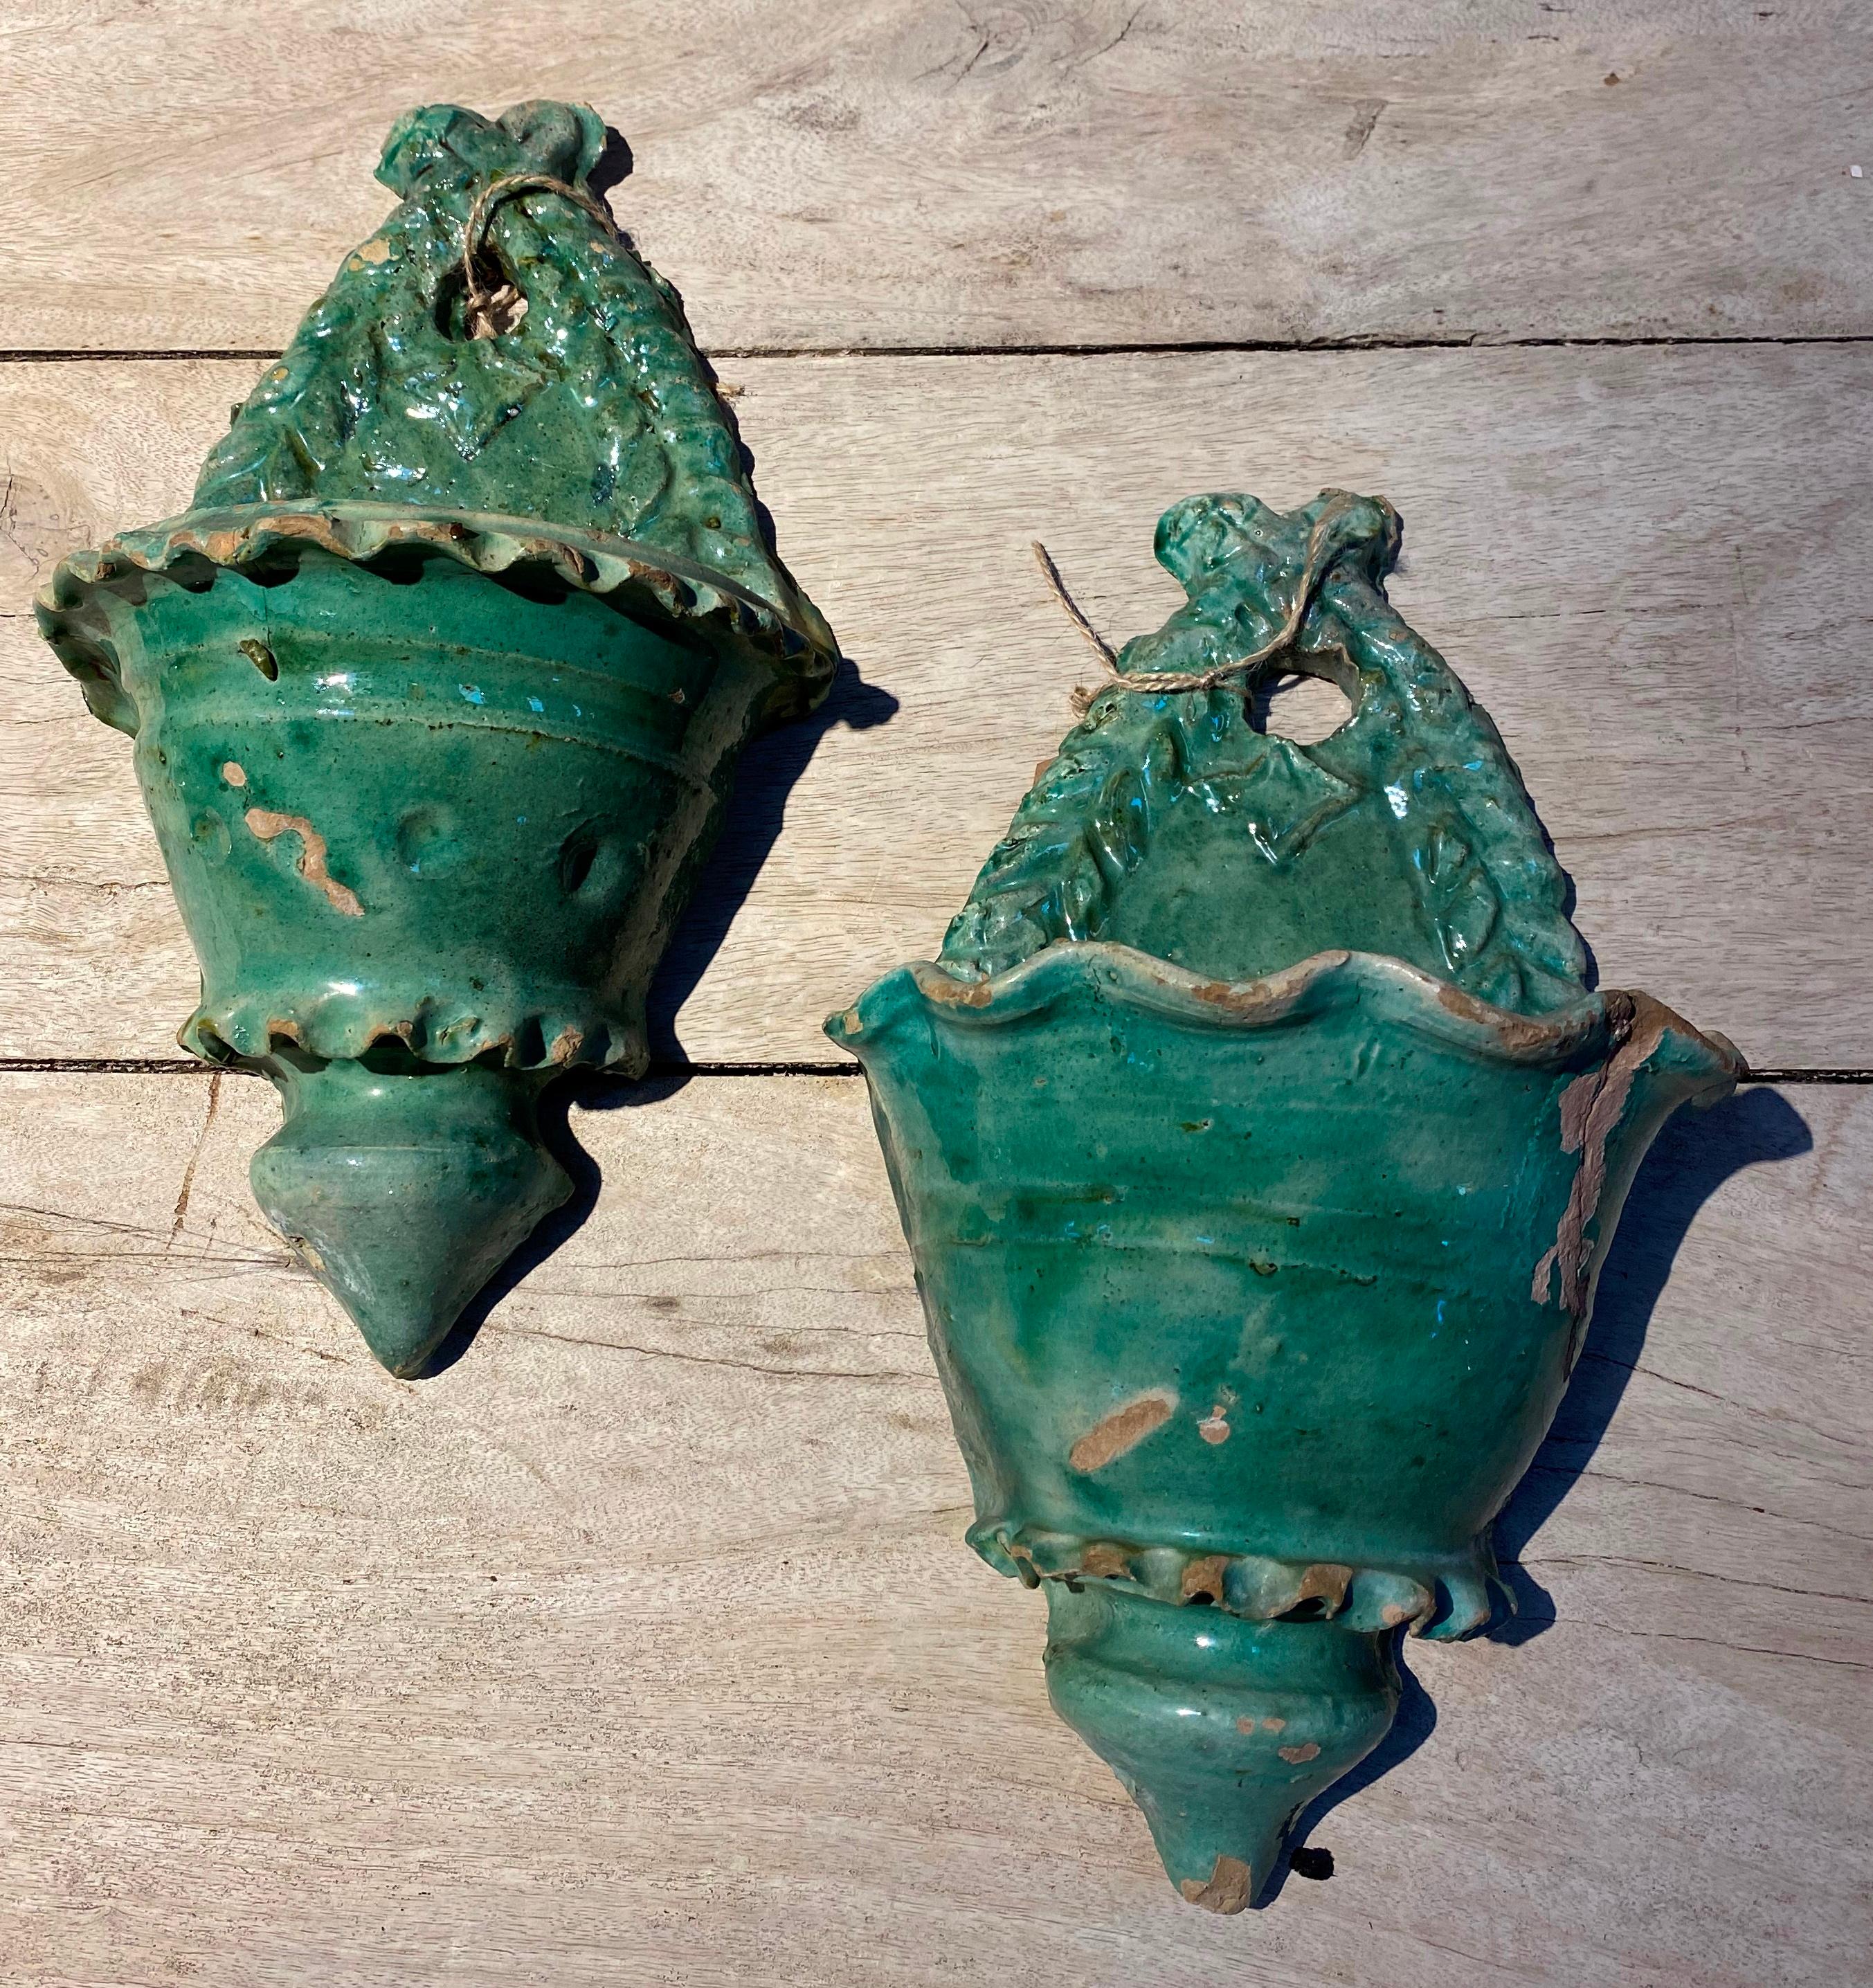 19th century pair of Spanish green glazed ceramic wall hanging planters.